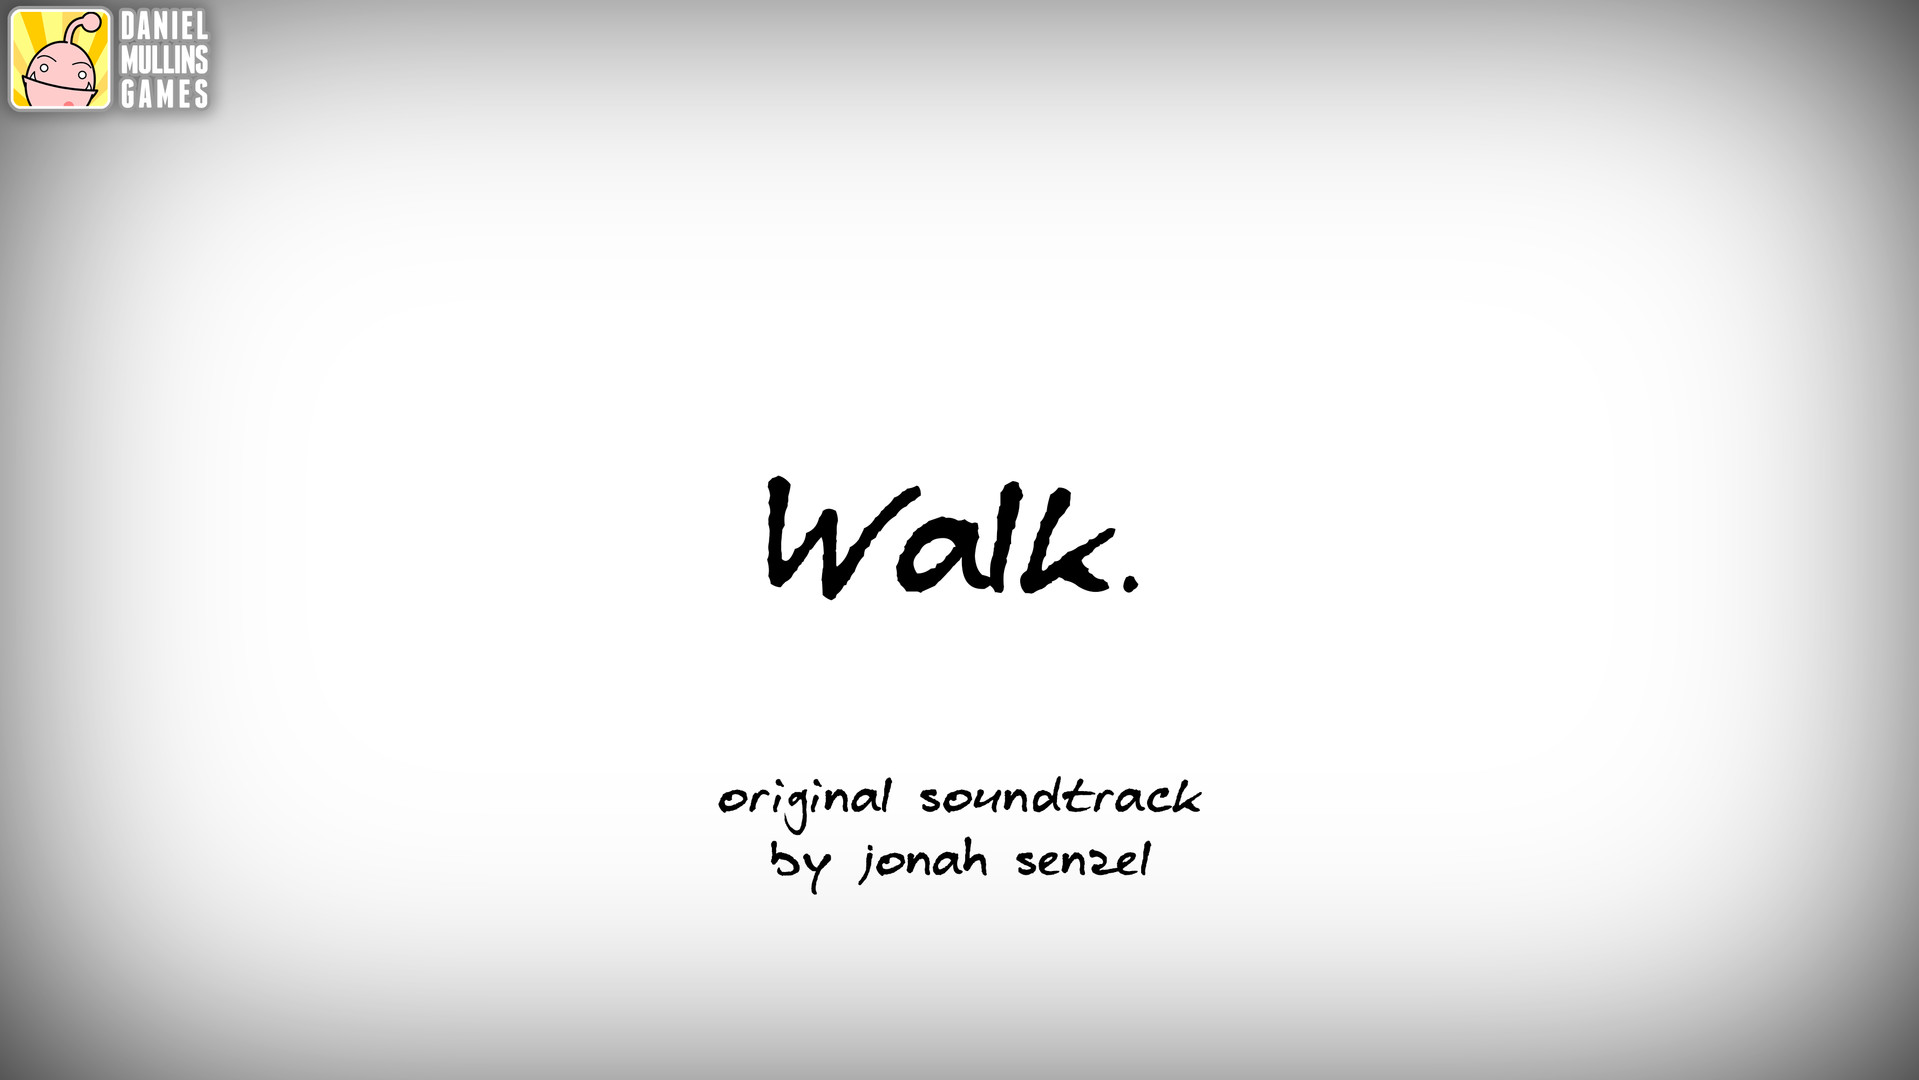 The Hex - "Walk" Original Soundtrack Featured Screenshot #1